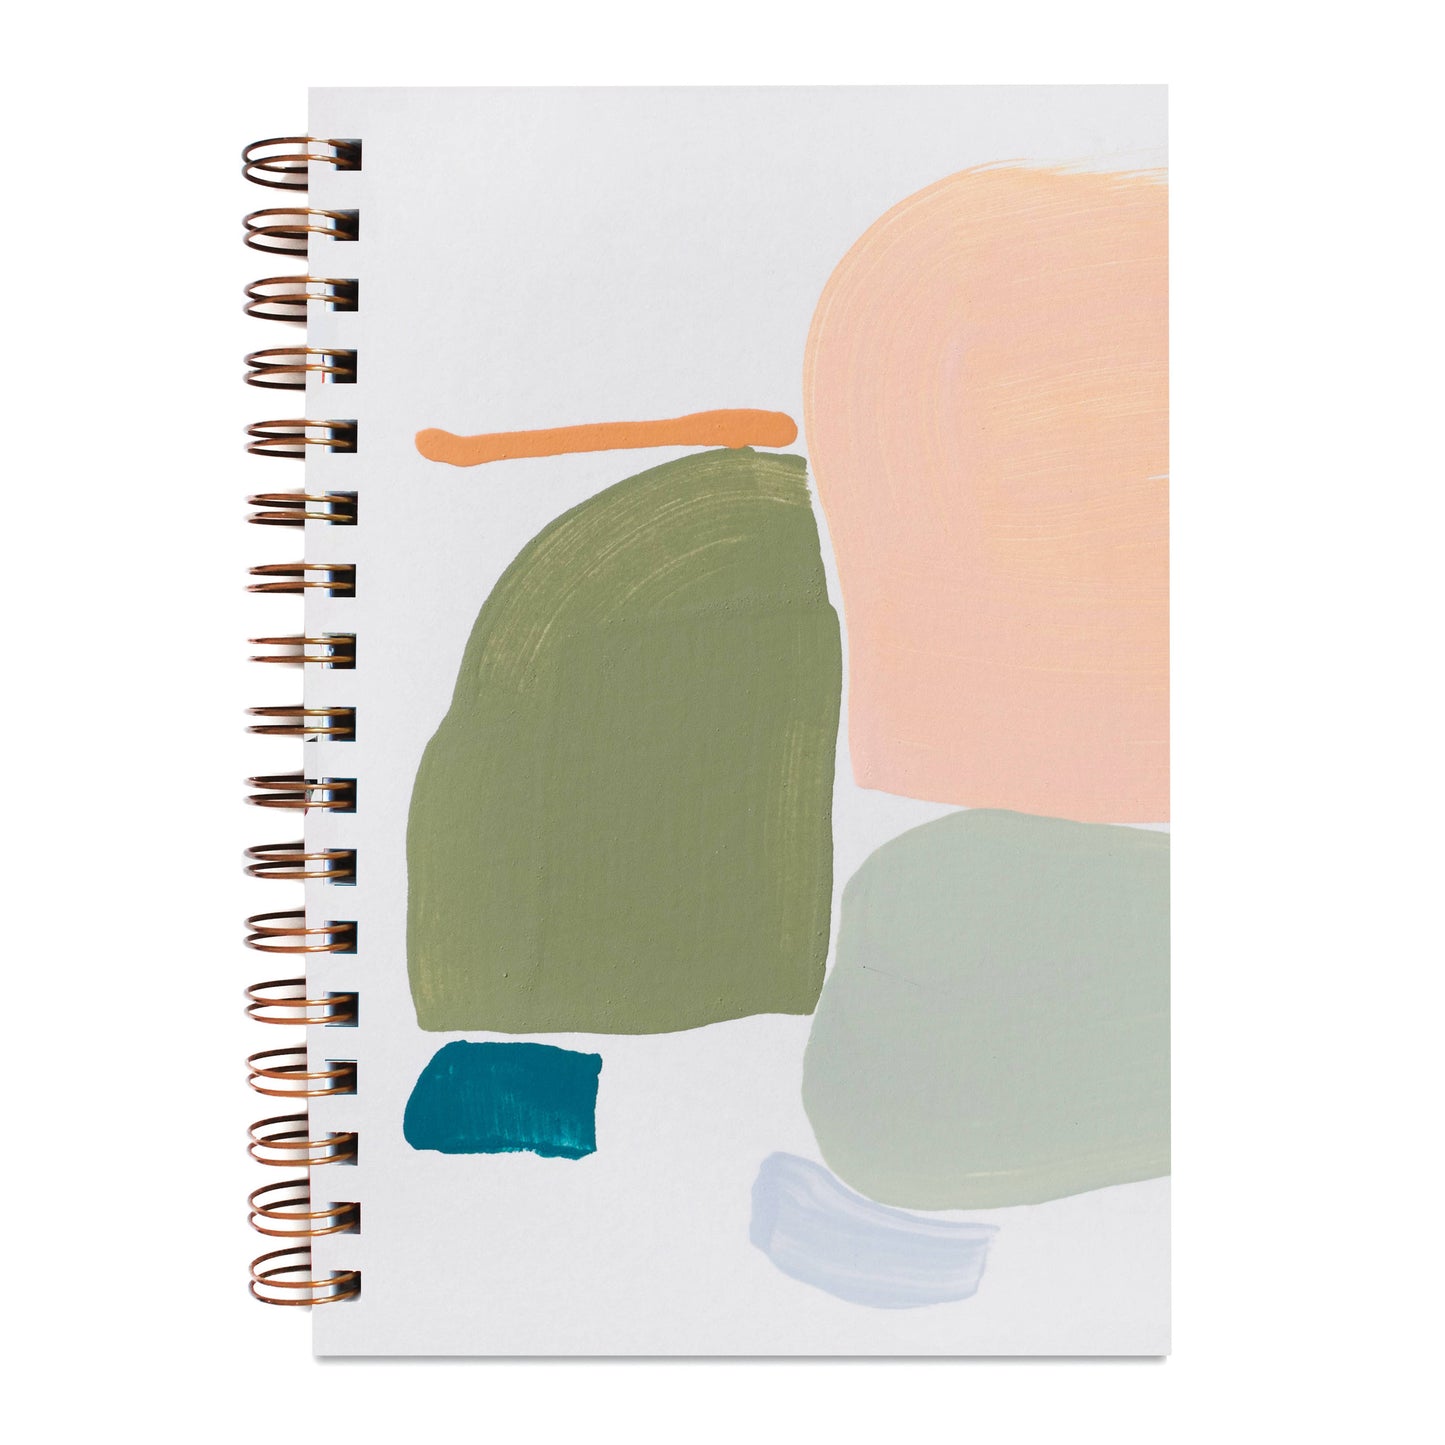 Playa Painted Notebook by Moglea